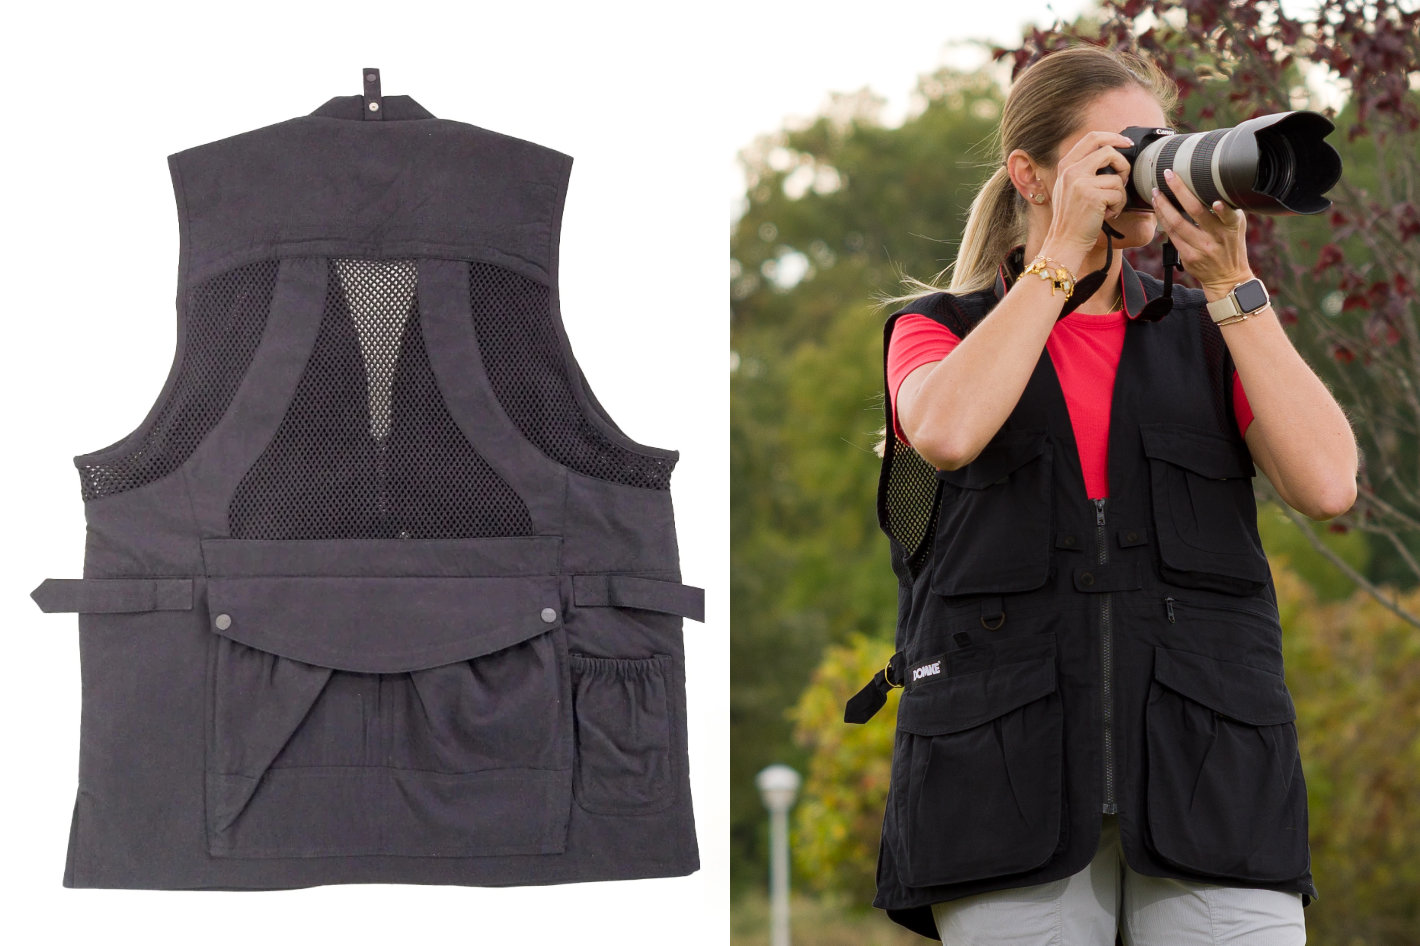 Tiffen introduces new Domke black vest, sling bag and tech pouch